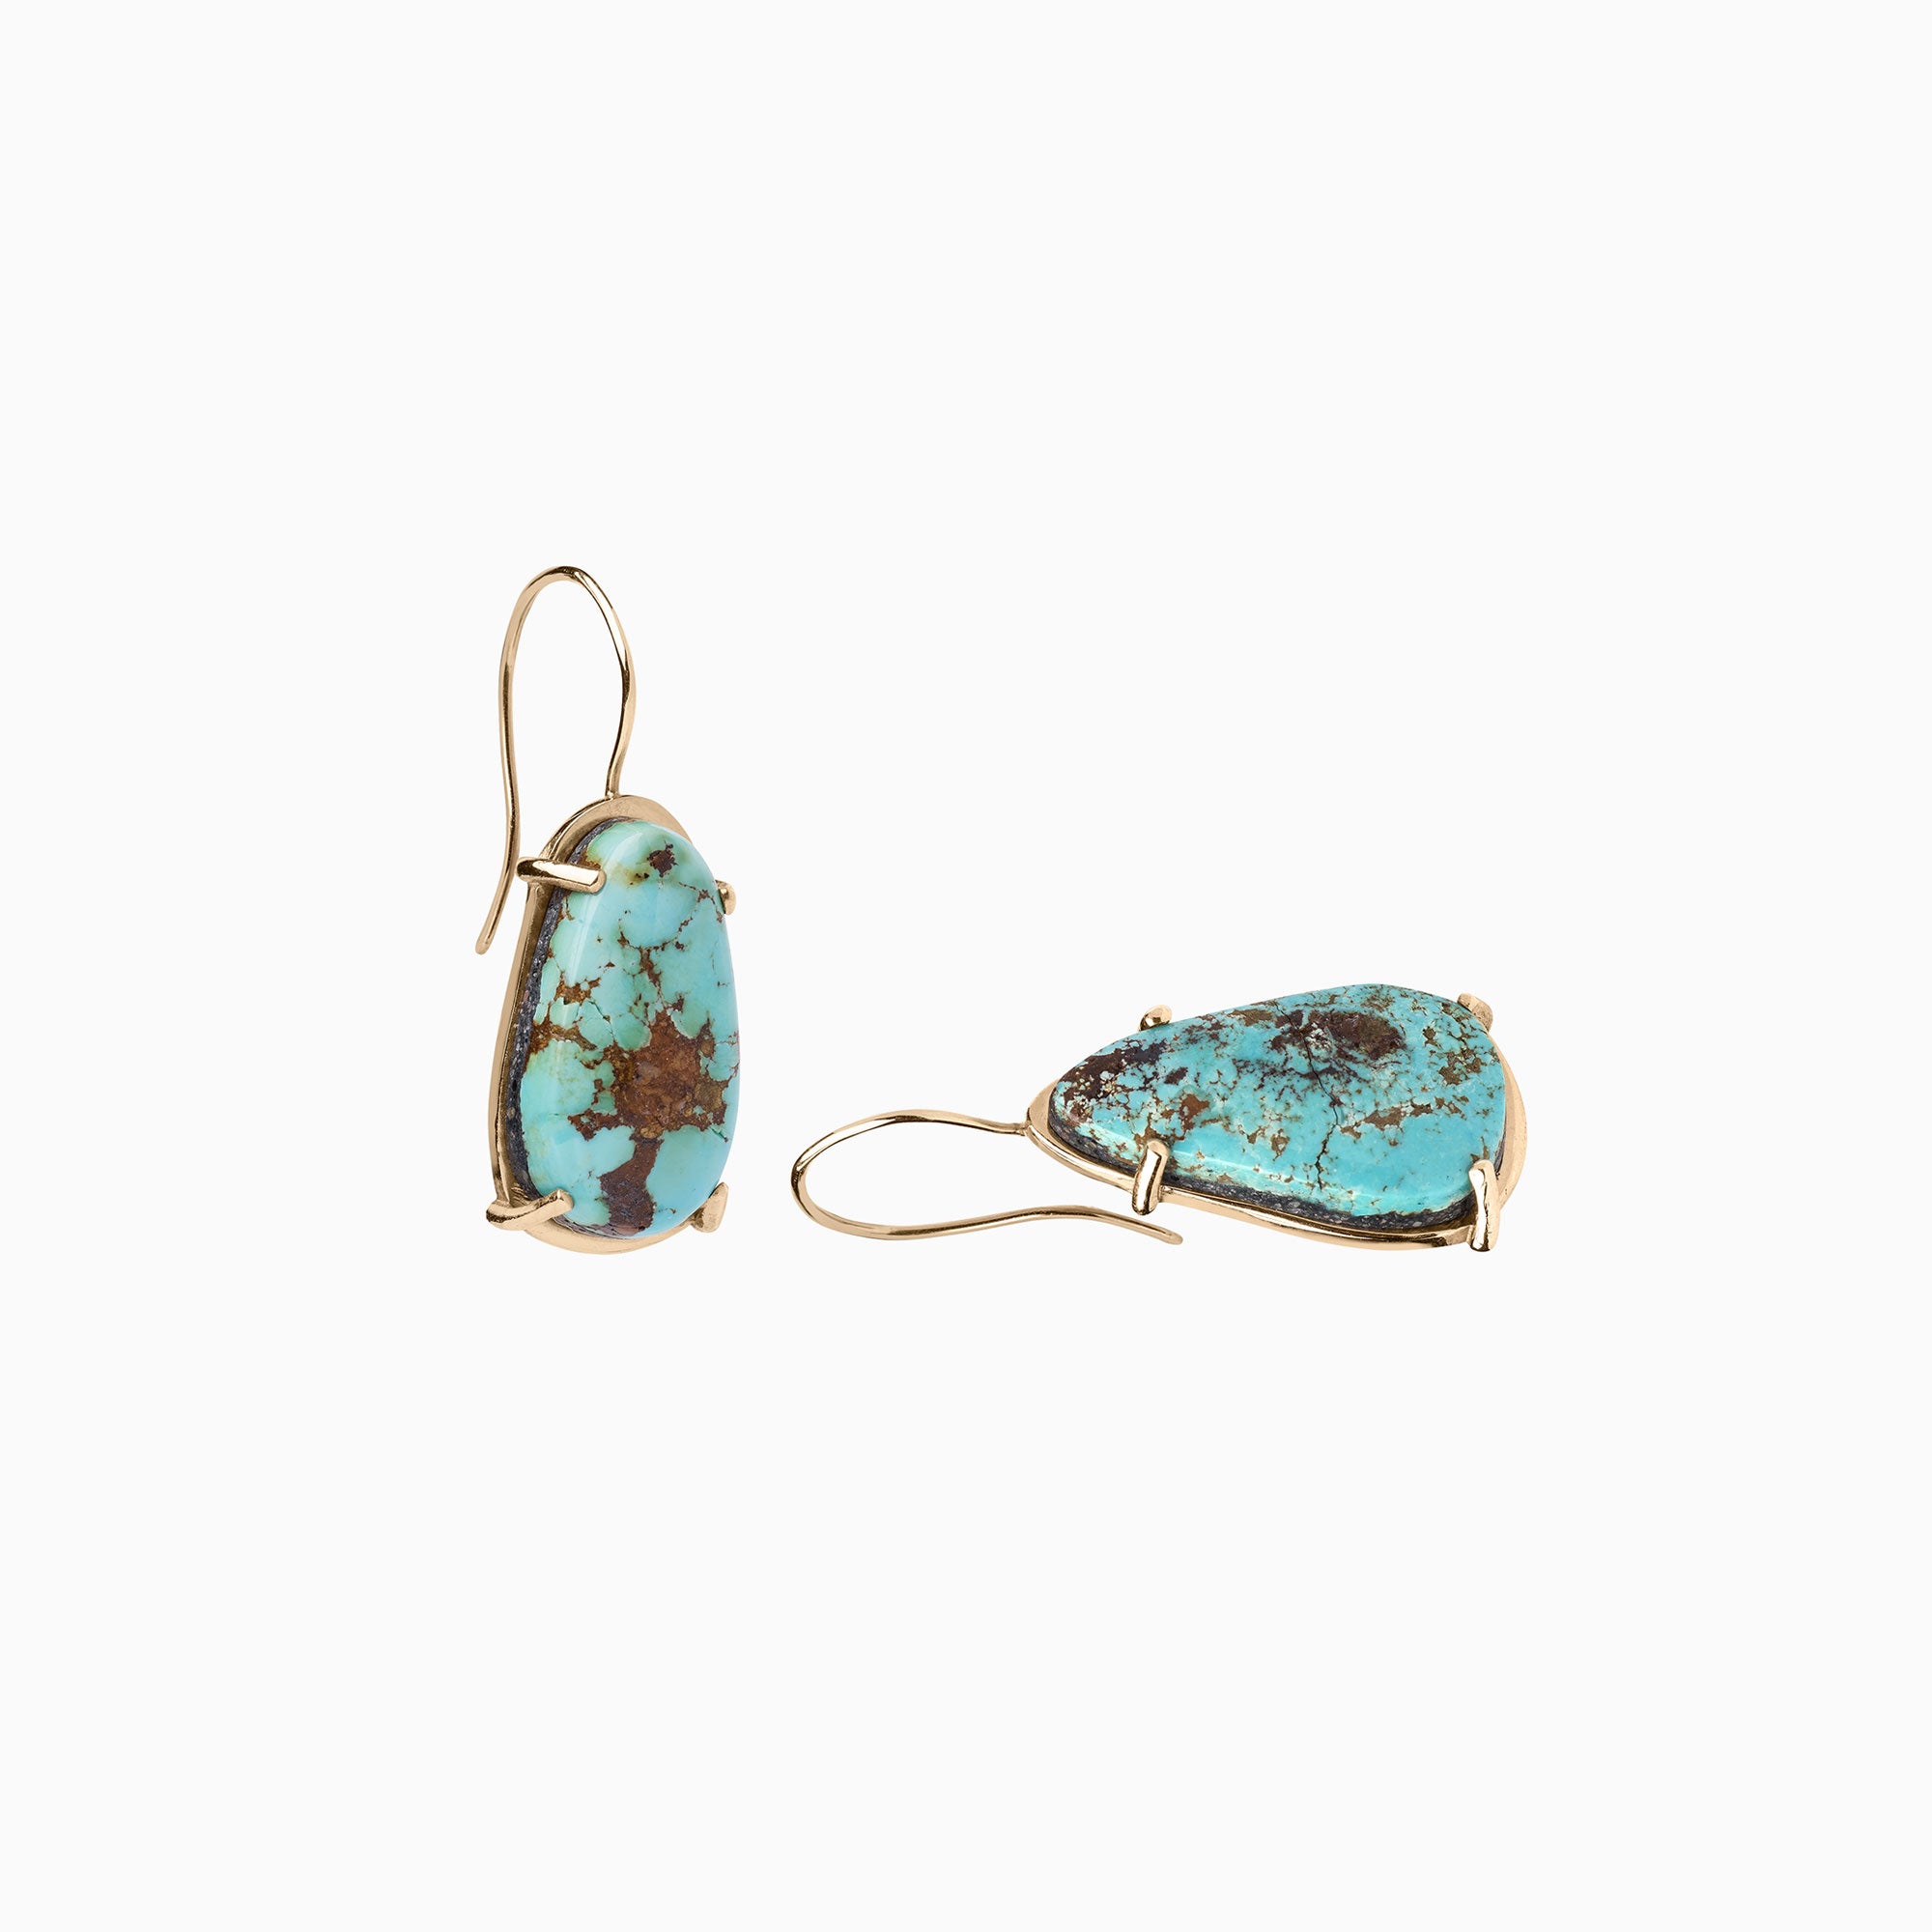 Nessa Designs Jewelry | Earrings | Tranquil Blues Turquoise Earrings